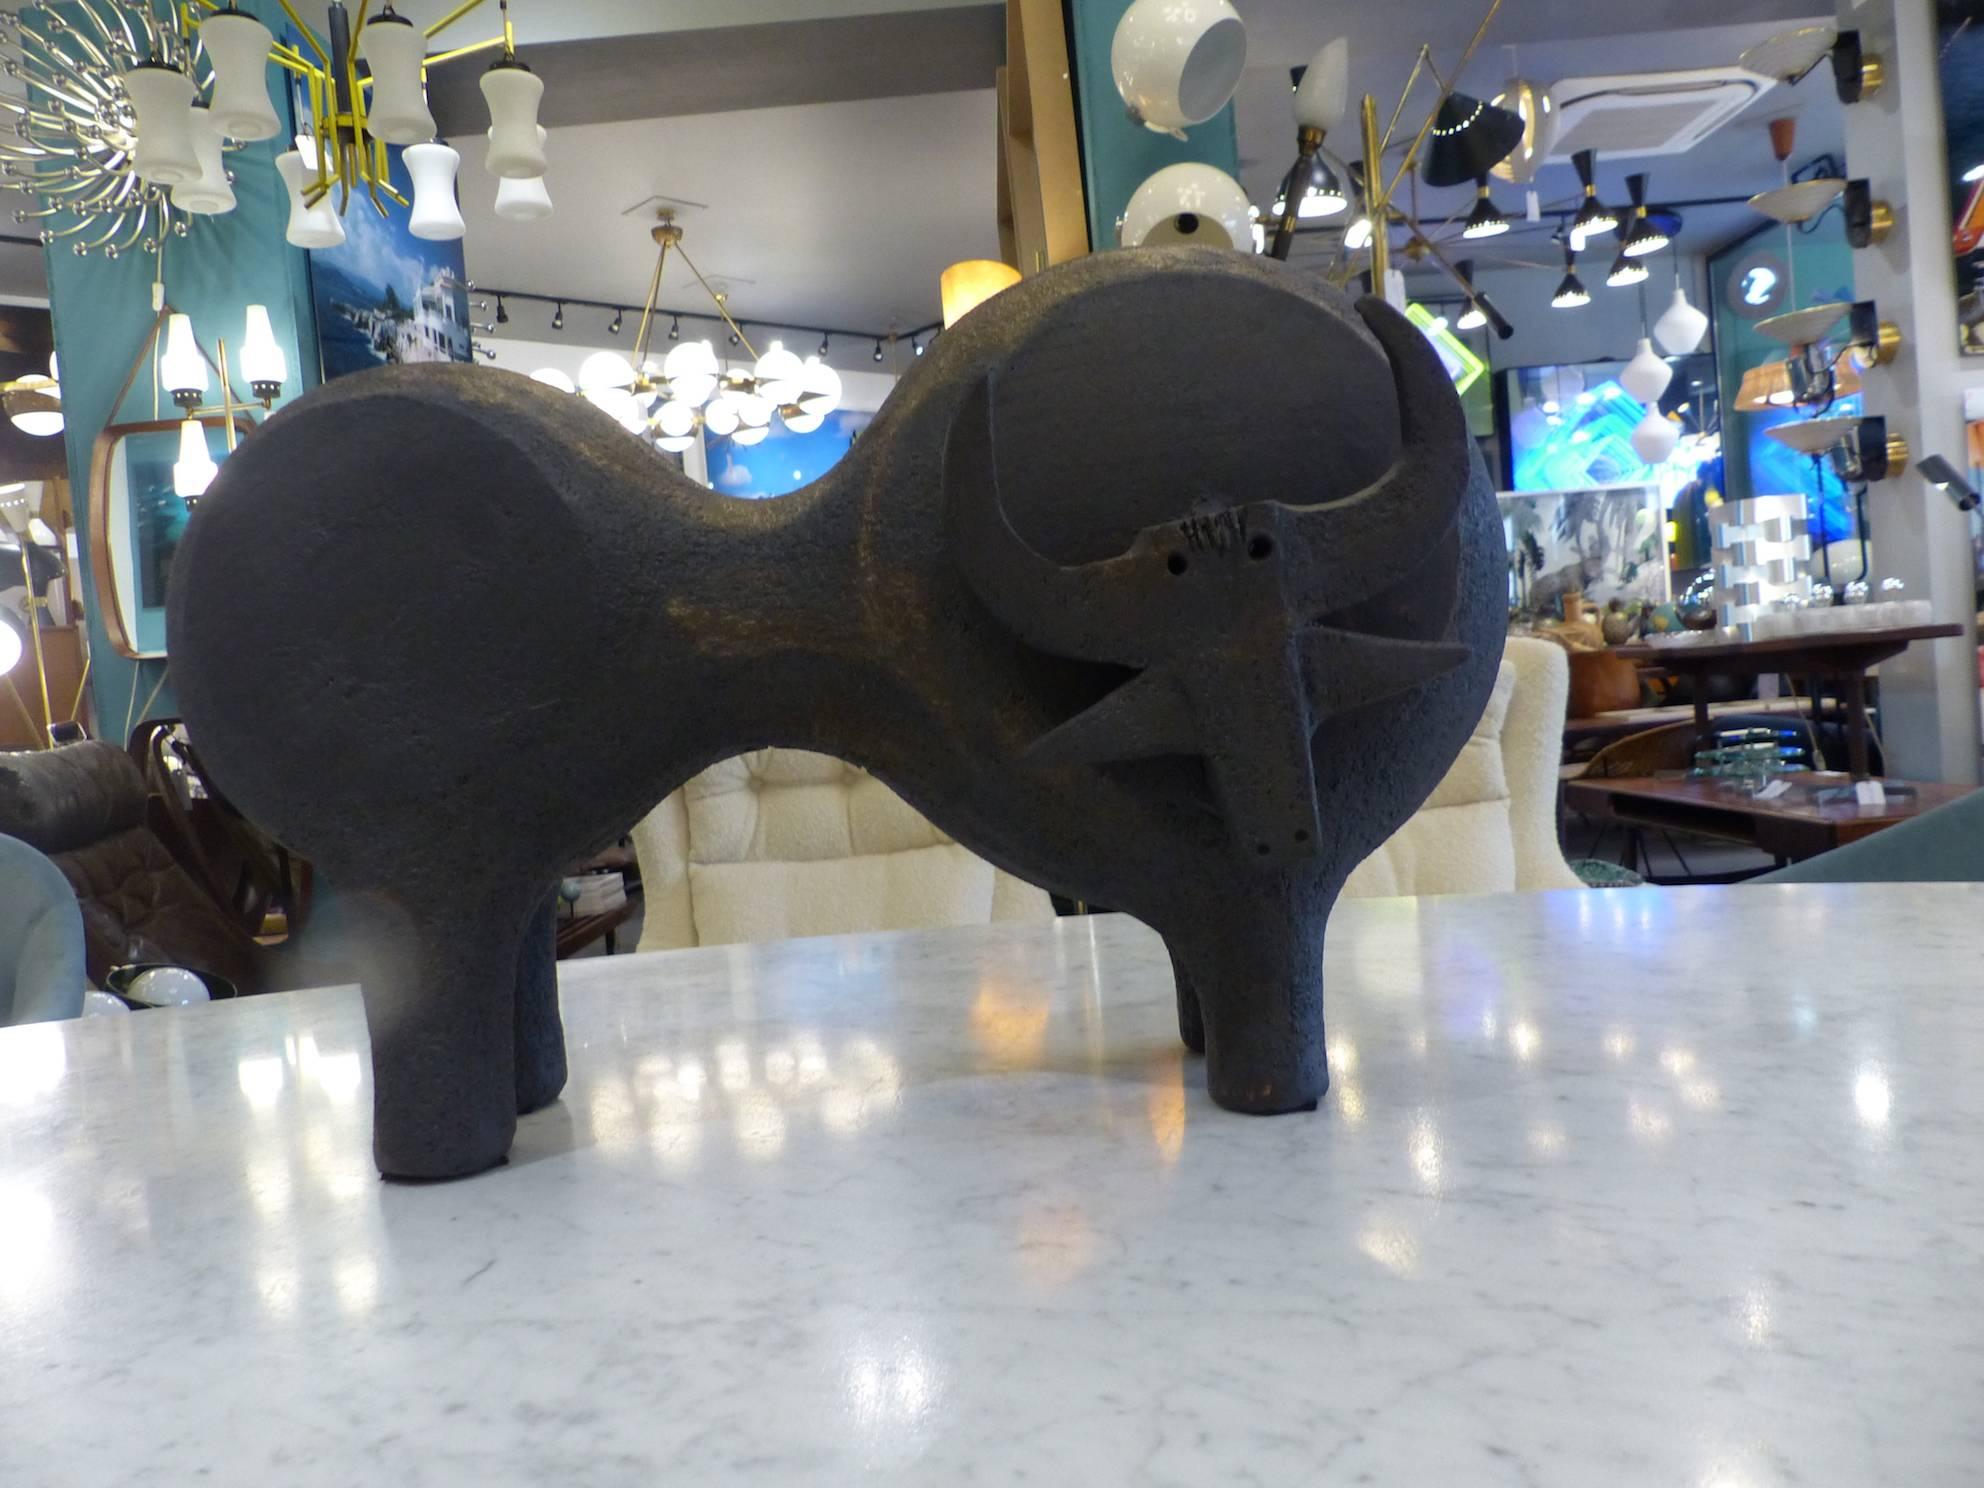 Huge Taurus ceramic sculpture by Dominique Pouchain, in excellent condition.